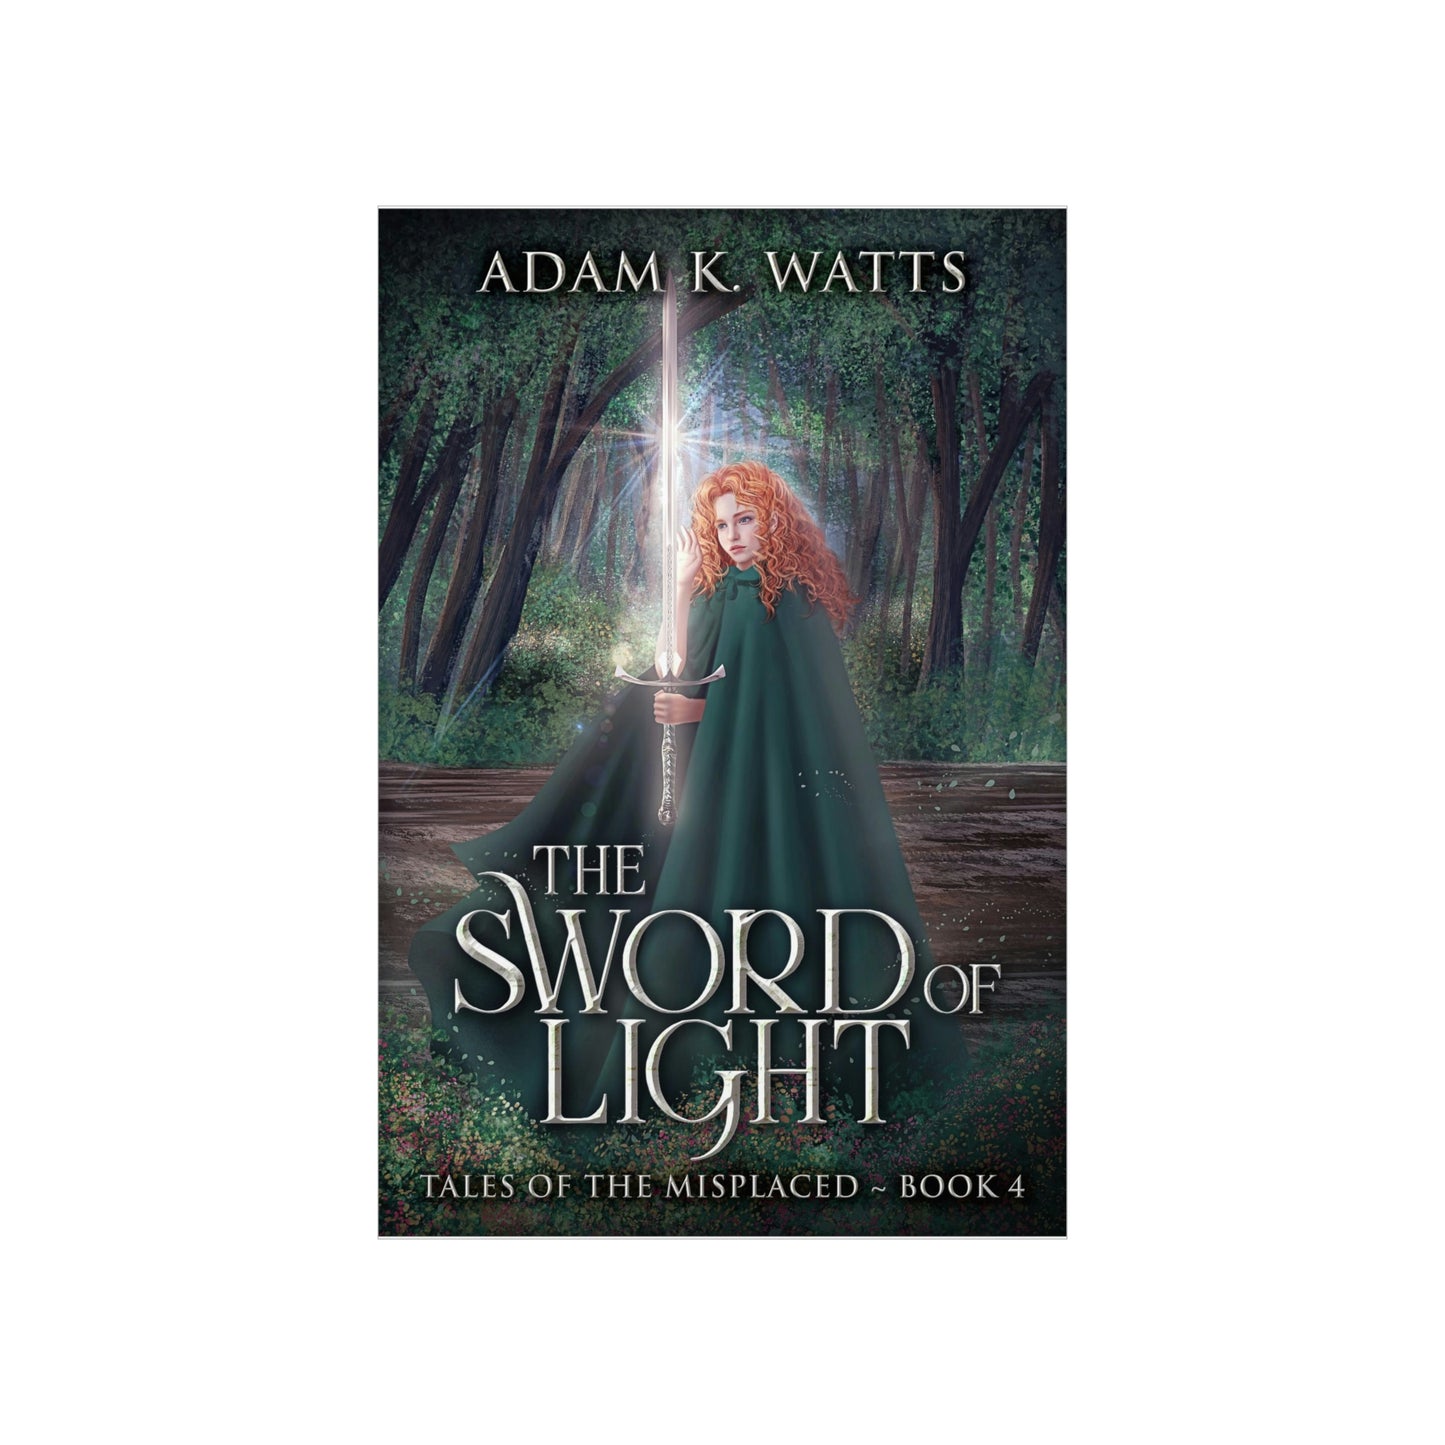 The Sword of Light - Matte Poster